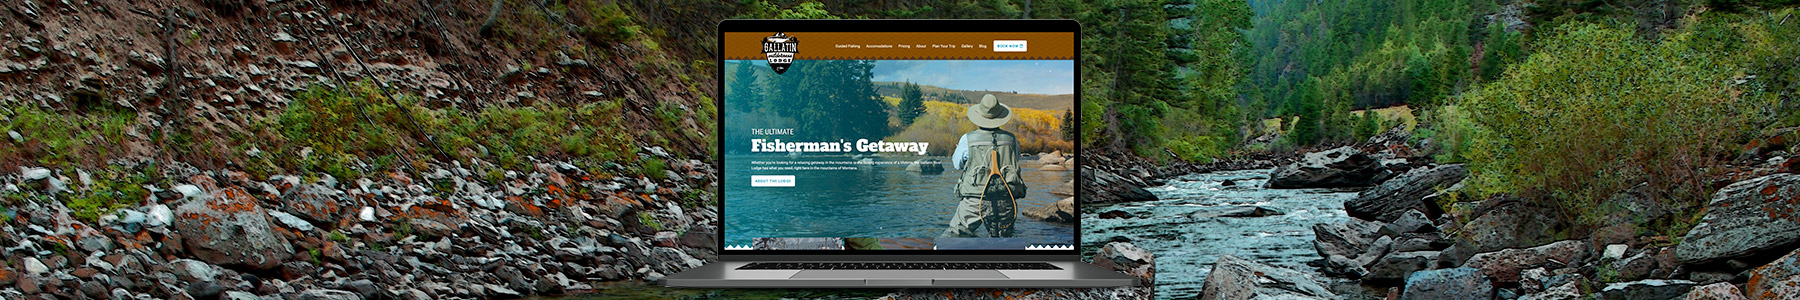 fishing lodge website design